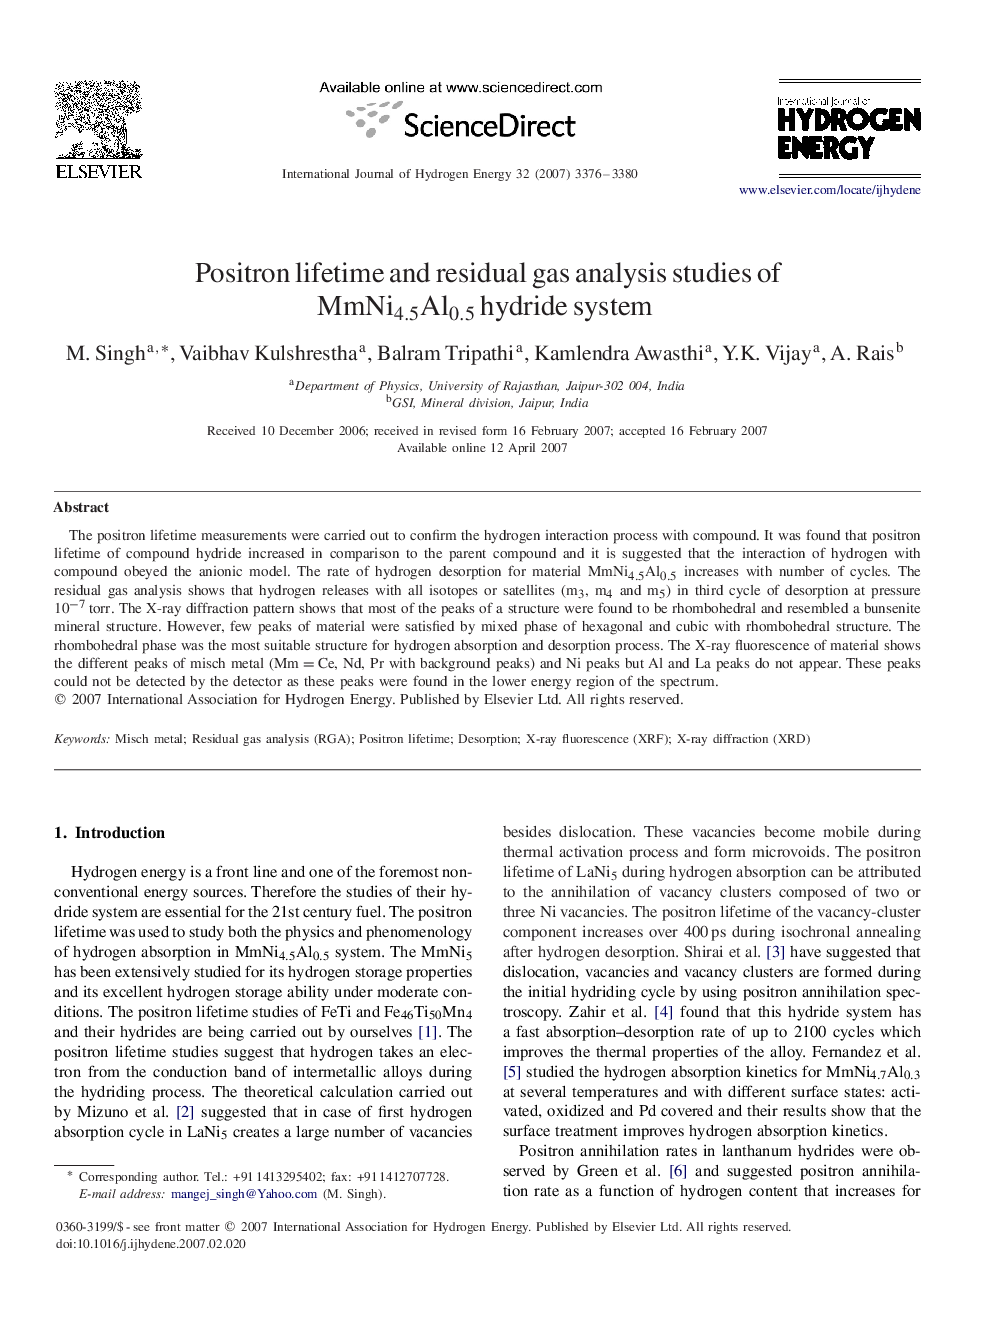 Positron lifetime and residual gas analysis studies of MmNi4.5Al0.5MmNi4.5Al0.5 hydride system